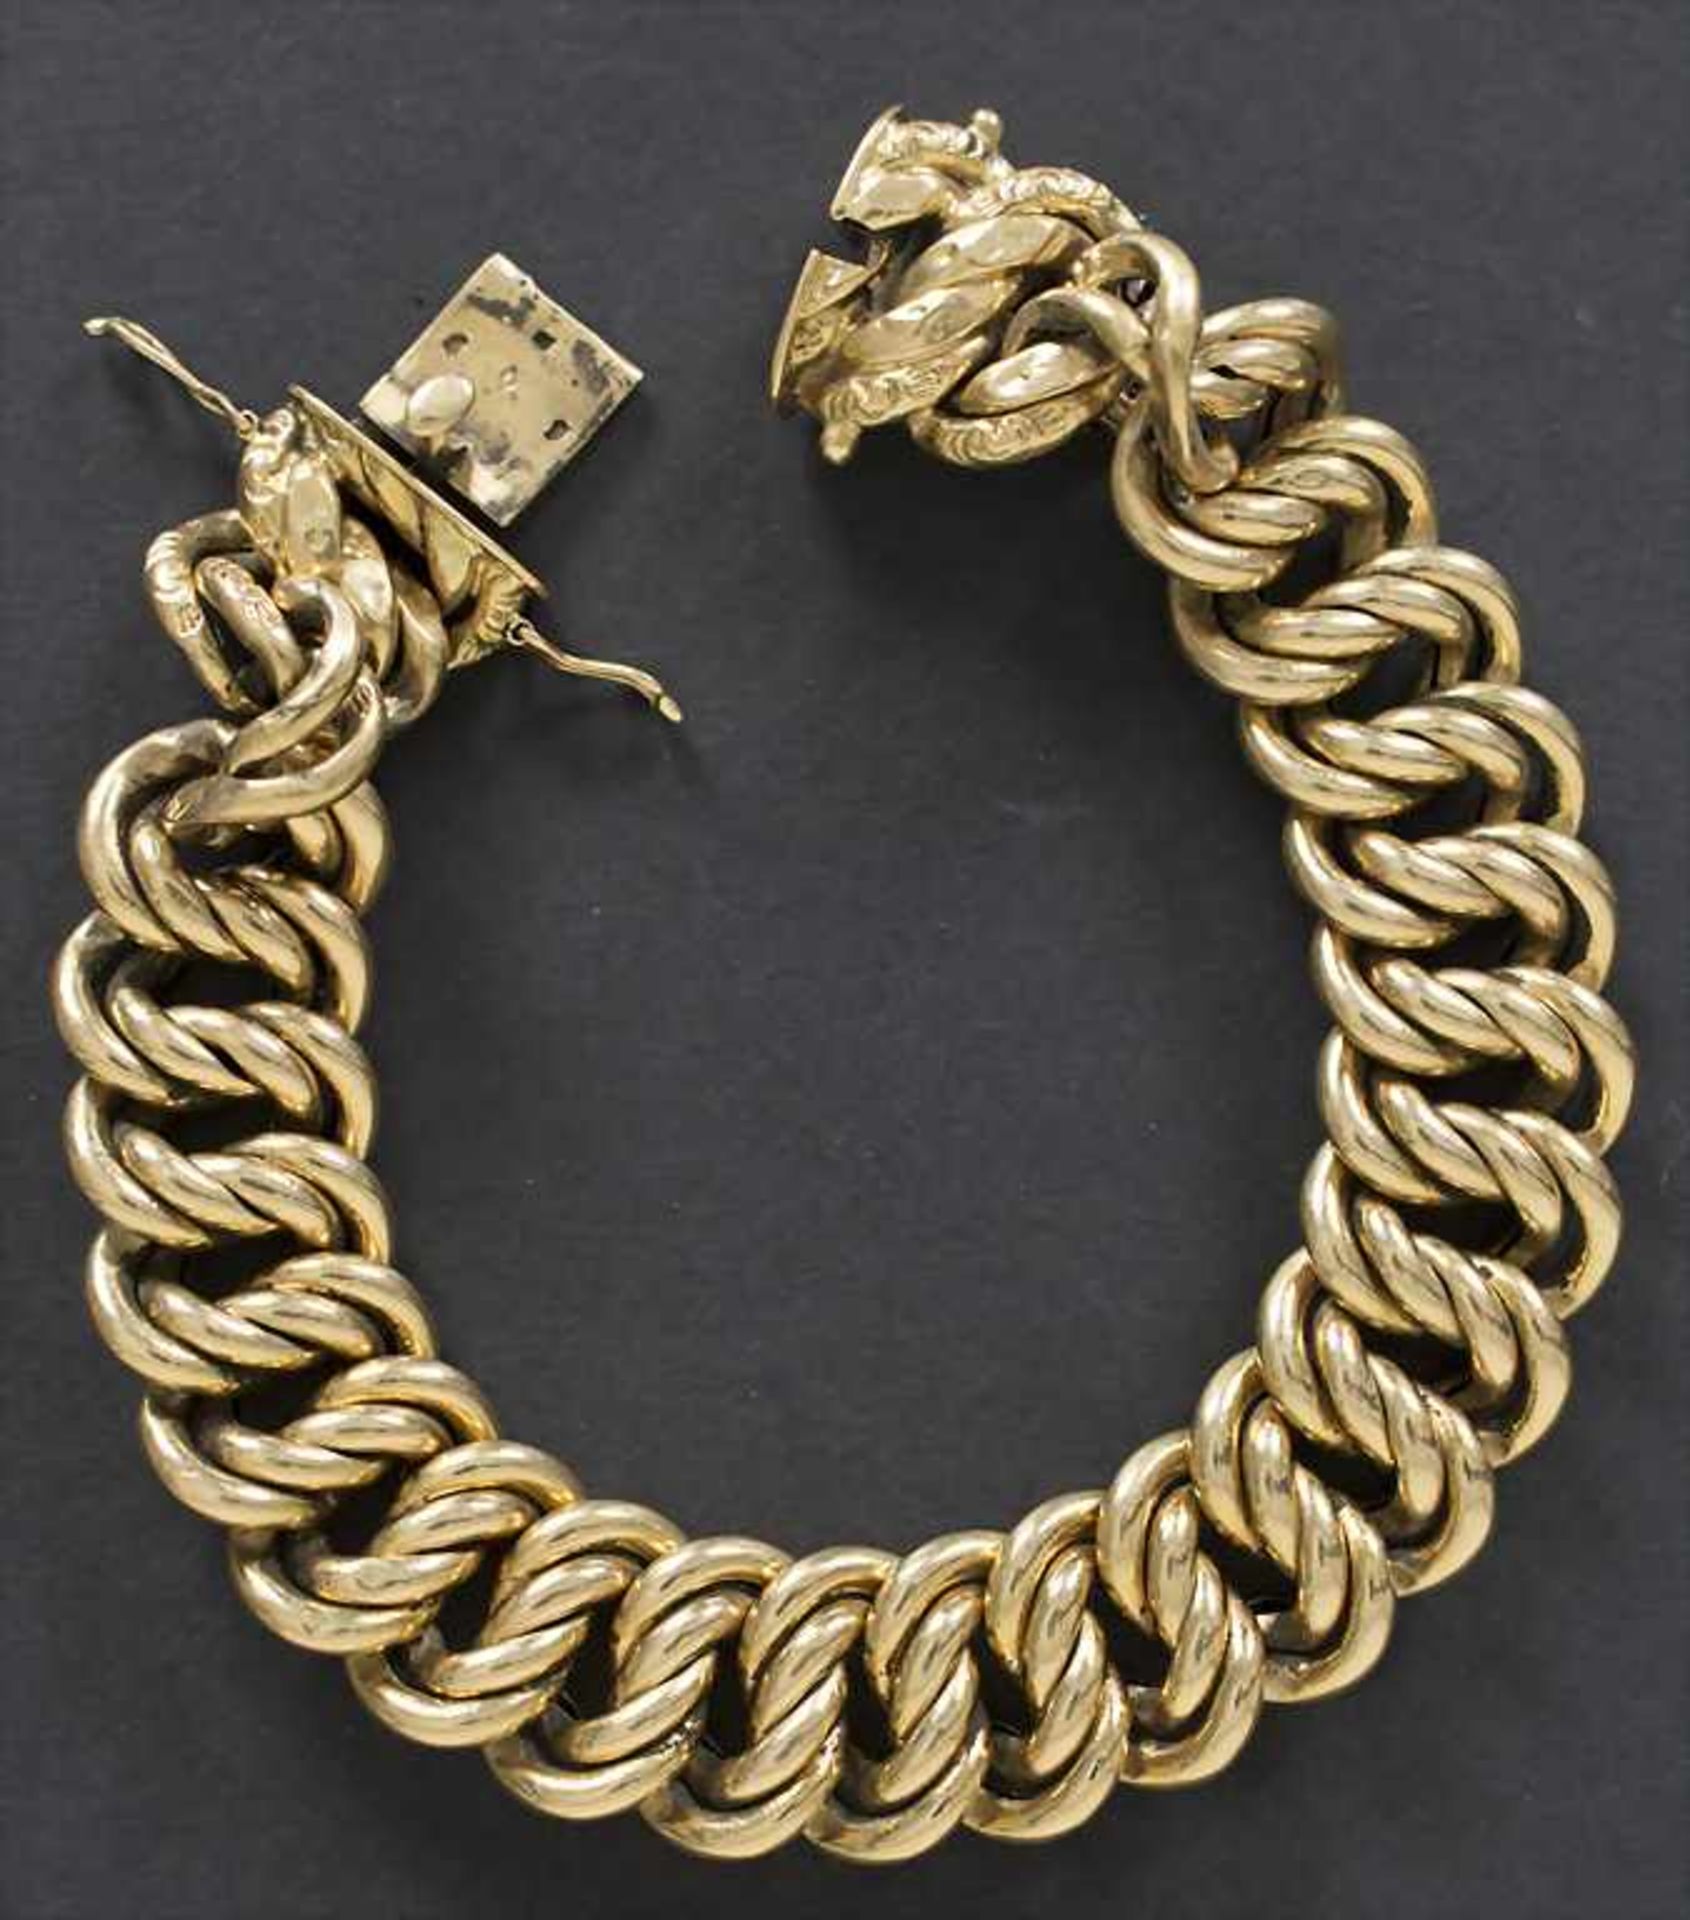 Damenarmband / A ladies bracelet, Paris, um 1950Material: Gelbgold GG 750/000 18 Kt, gepunzt,